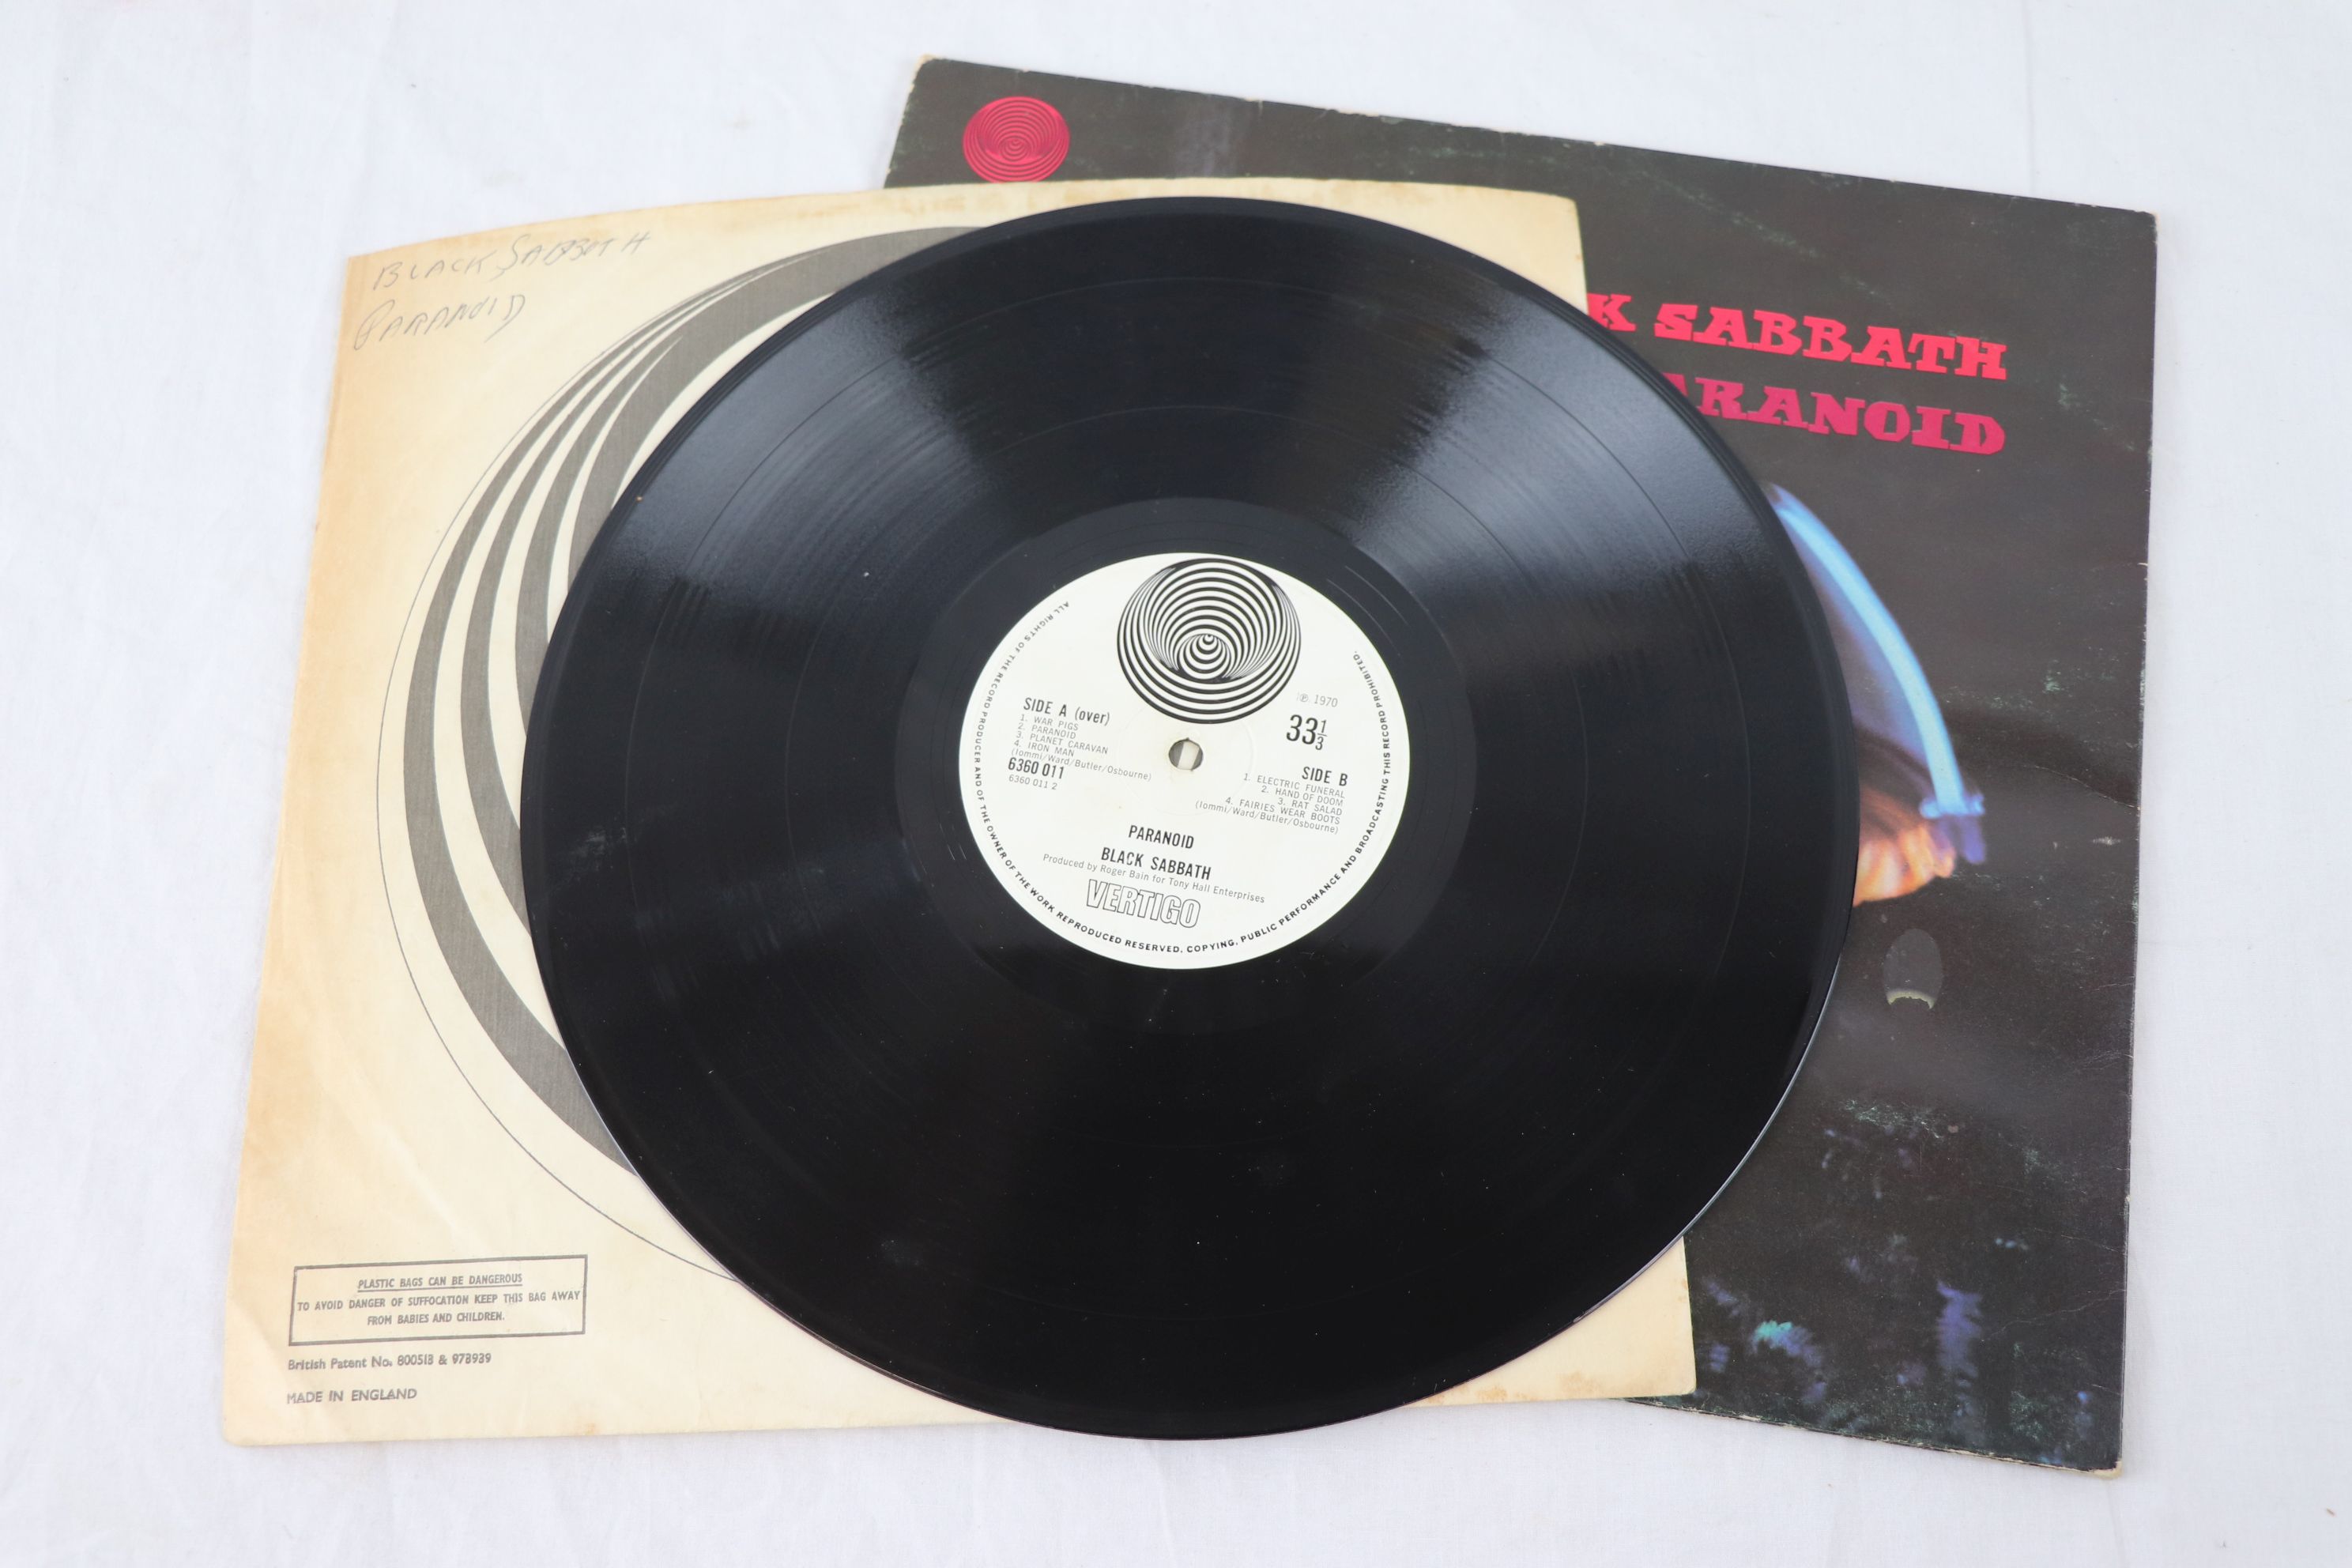 Vinyl - Black Sabbath Paranoid (6360011) with swirl inner, no Jim Simpson credit, sleeve and vinyl - Image 7 of 11